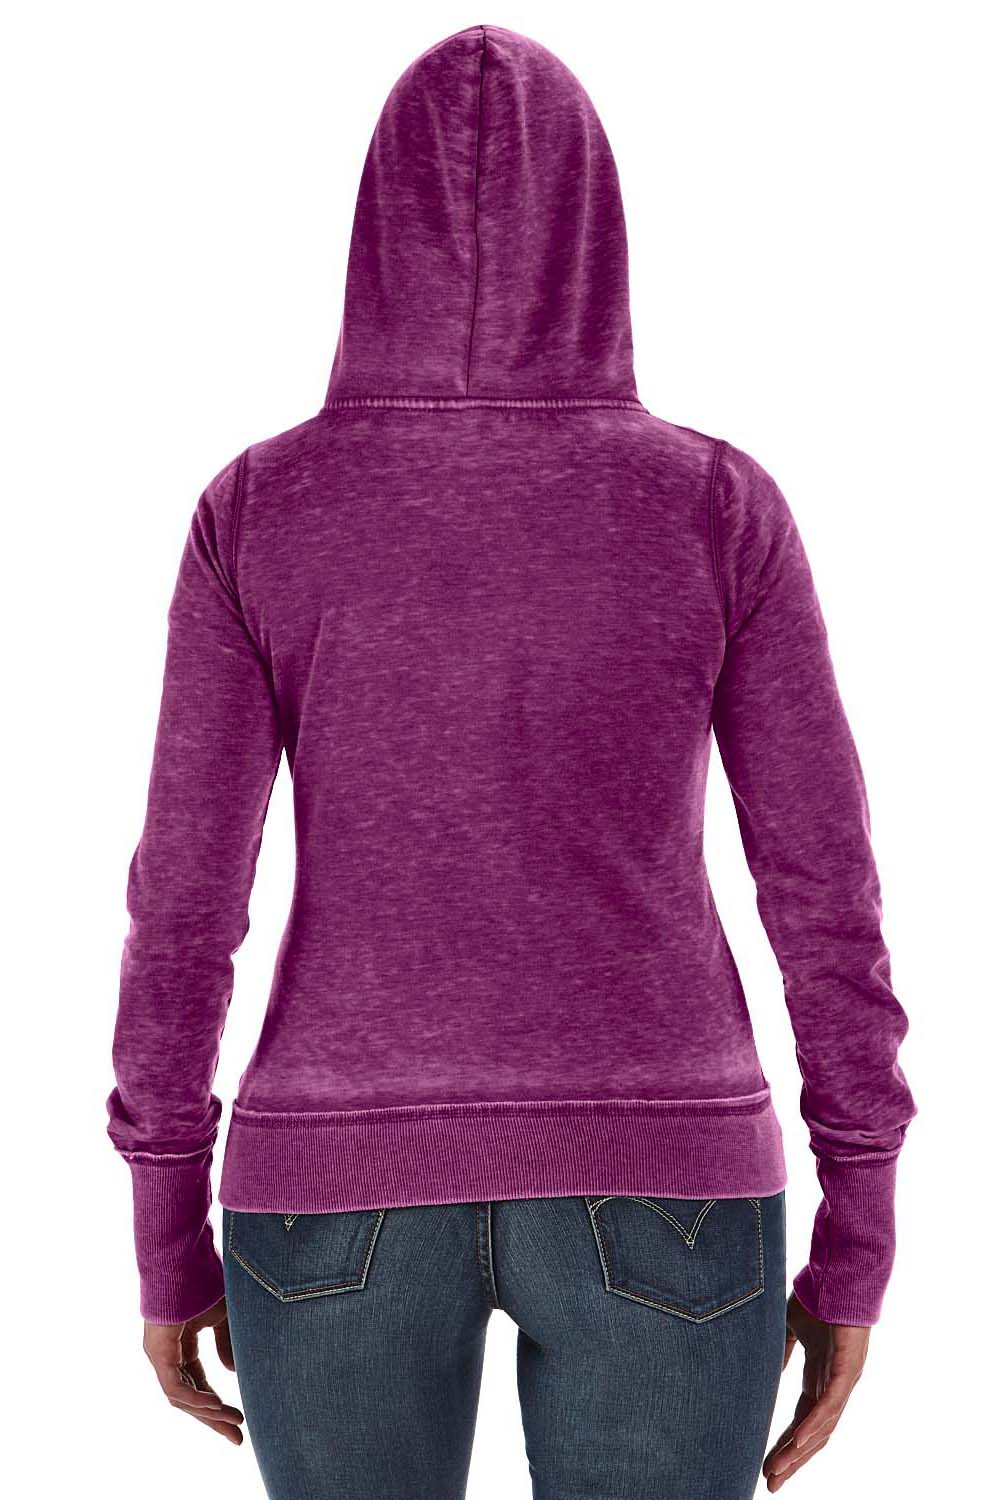 J America JA8913 Womens Zen Burnout Fleece Full Zip Hooded Sweatshirt Hoodie Berry Purple Back